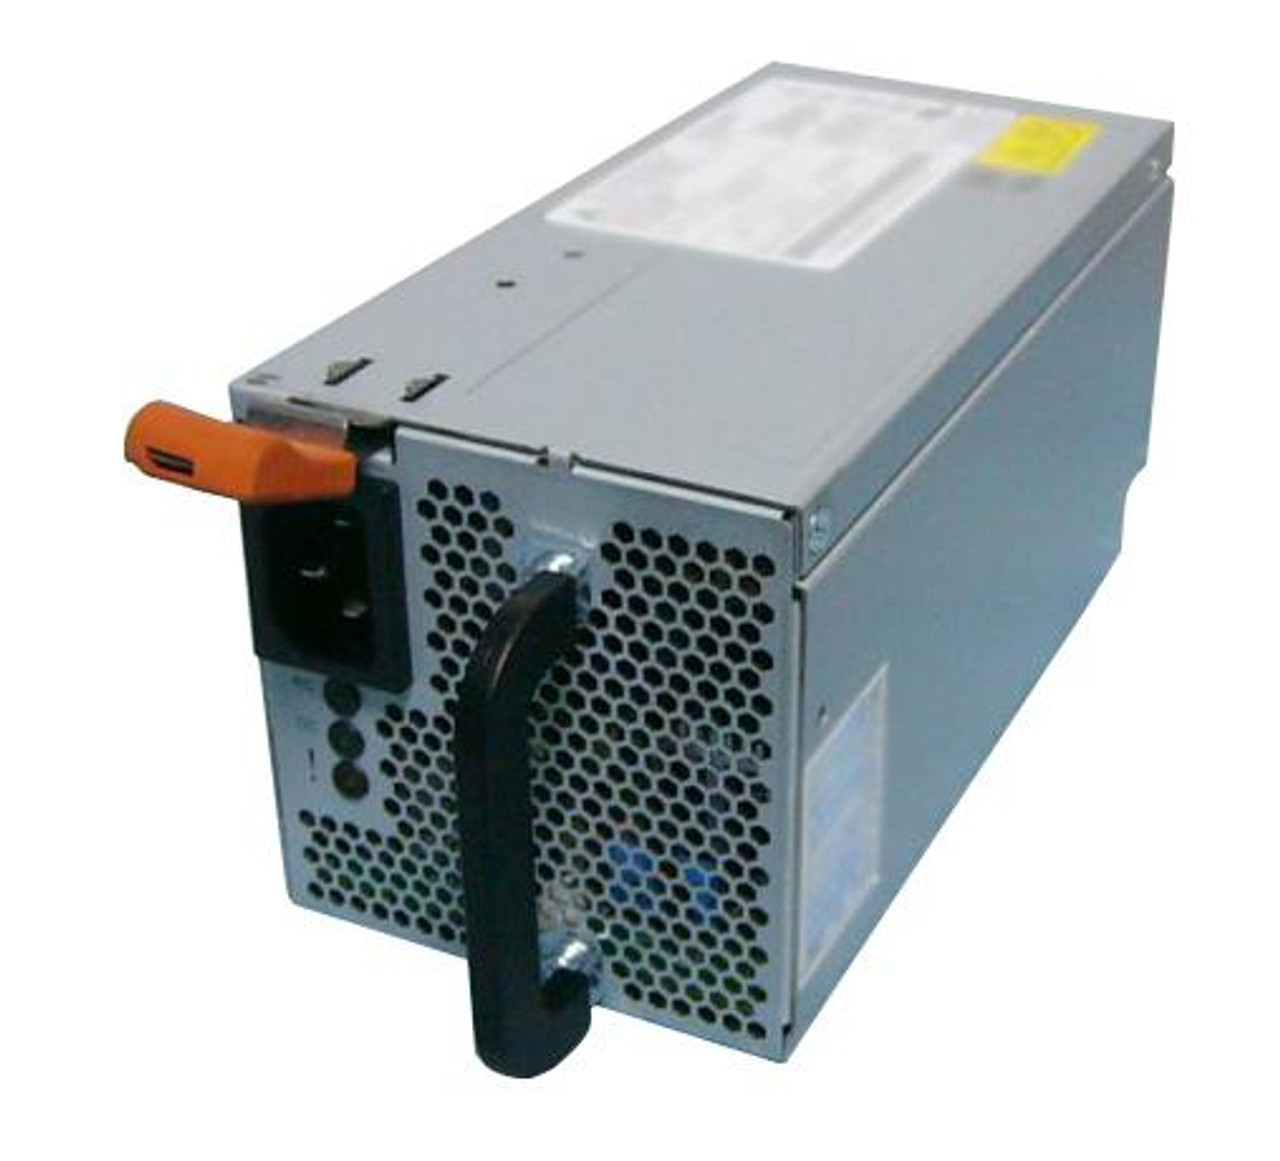 69Y5535 - IBM 350-Watts Power Supply for IBM System x3100 M4